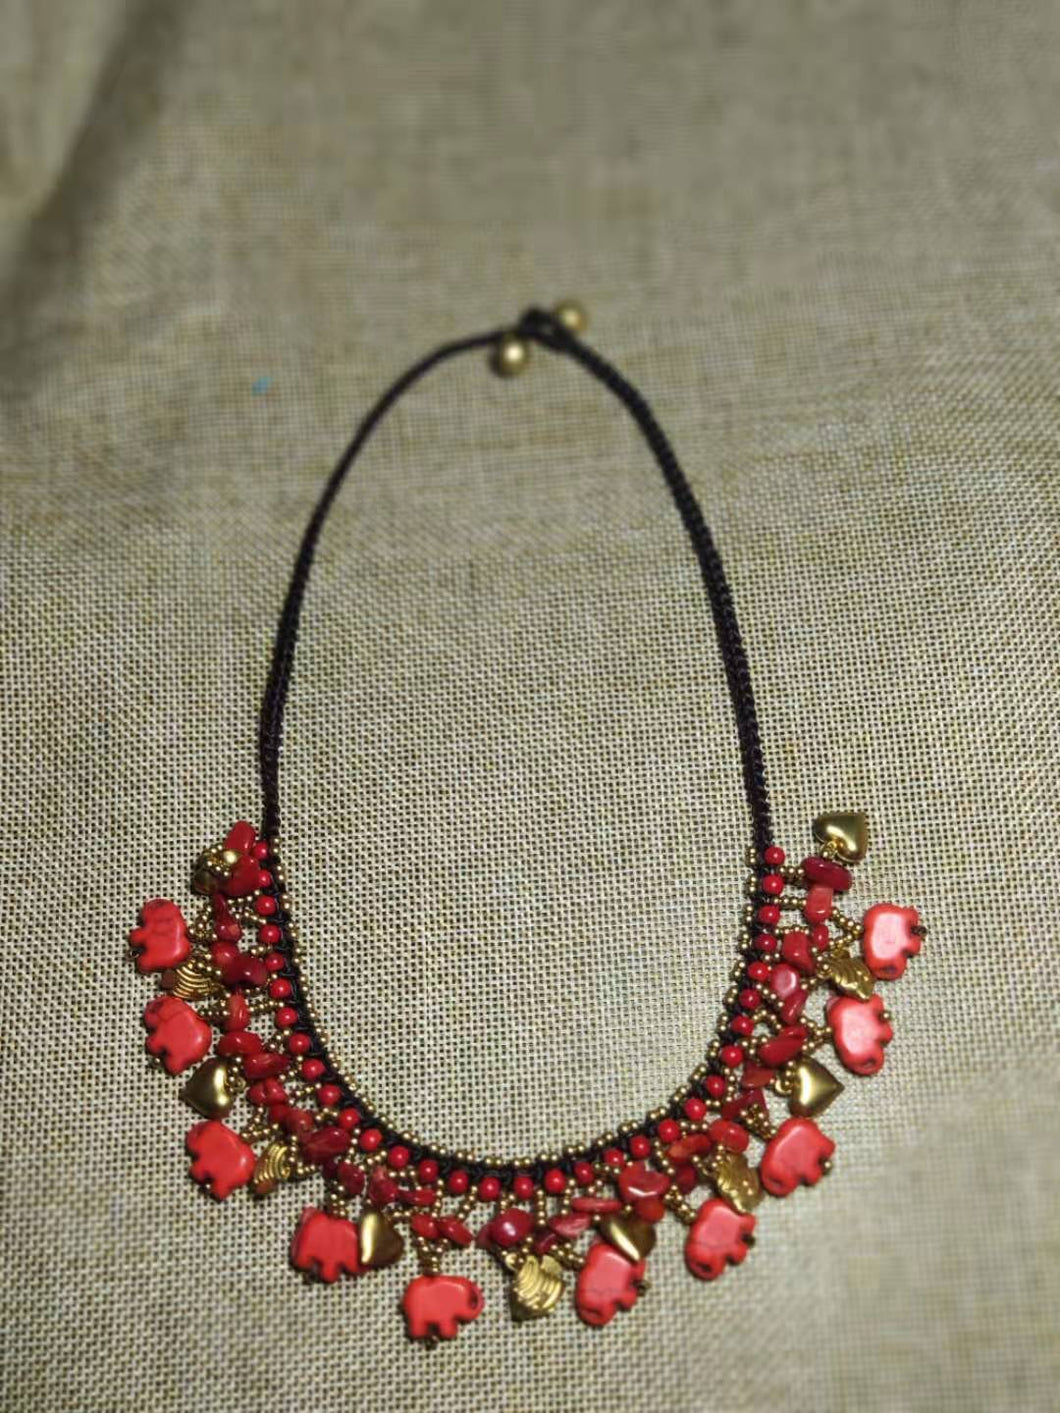 Boho style semi-precious stone necklace Thai wax thread braided clavicle chain women